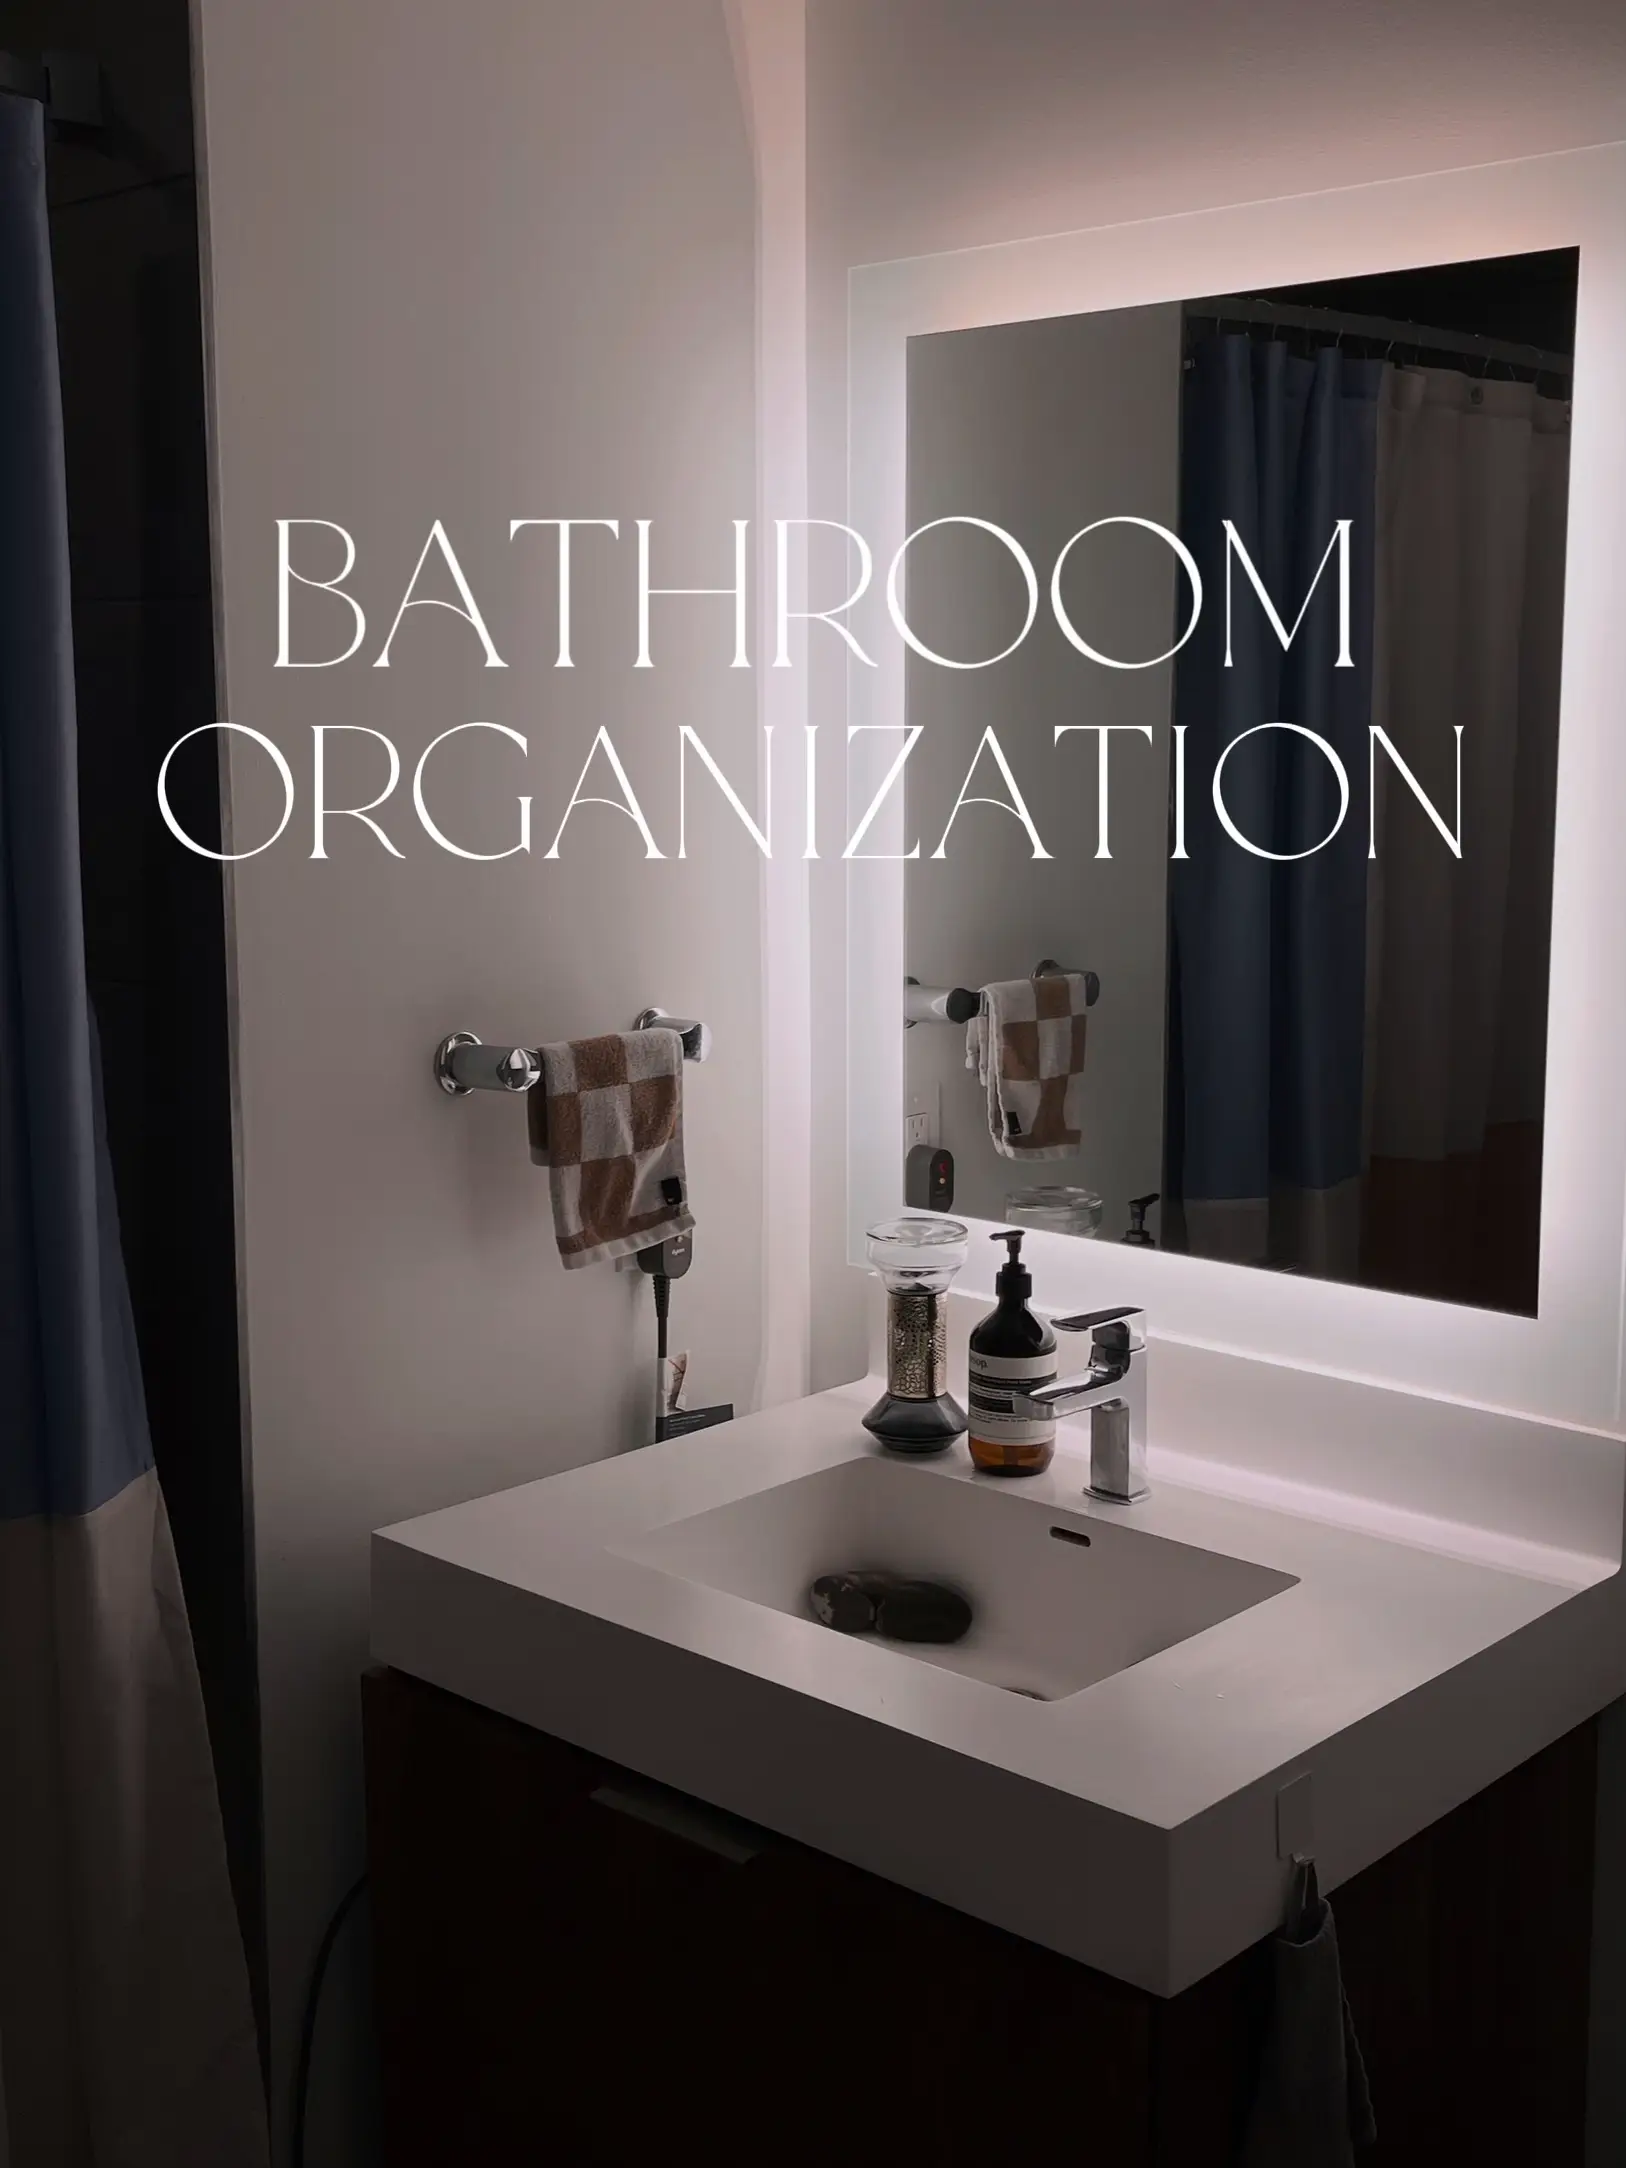 my favorite bathroom organinzation from  #bathroomorganization #